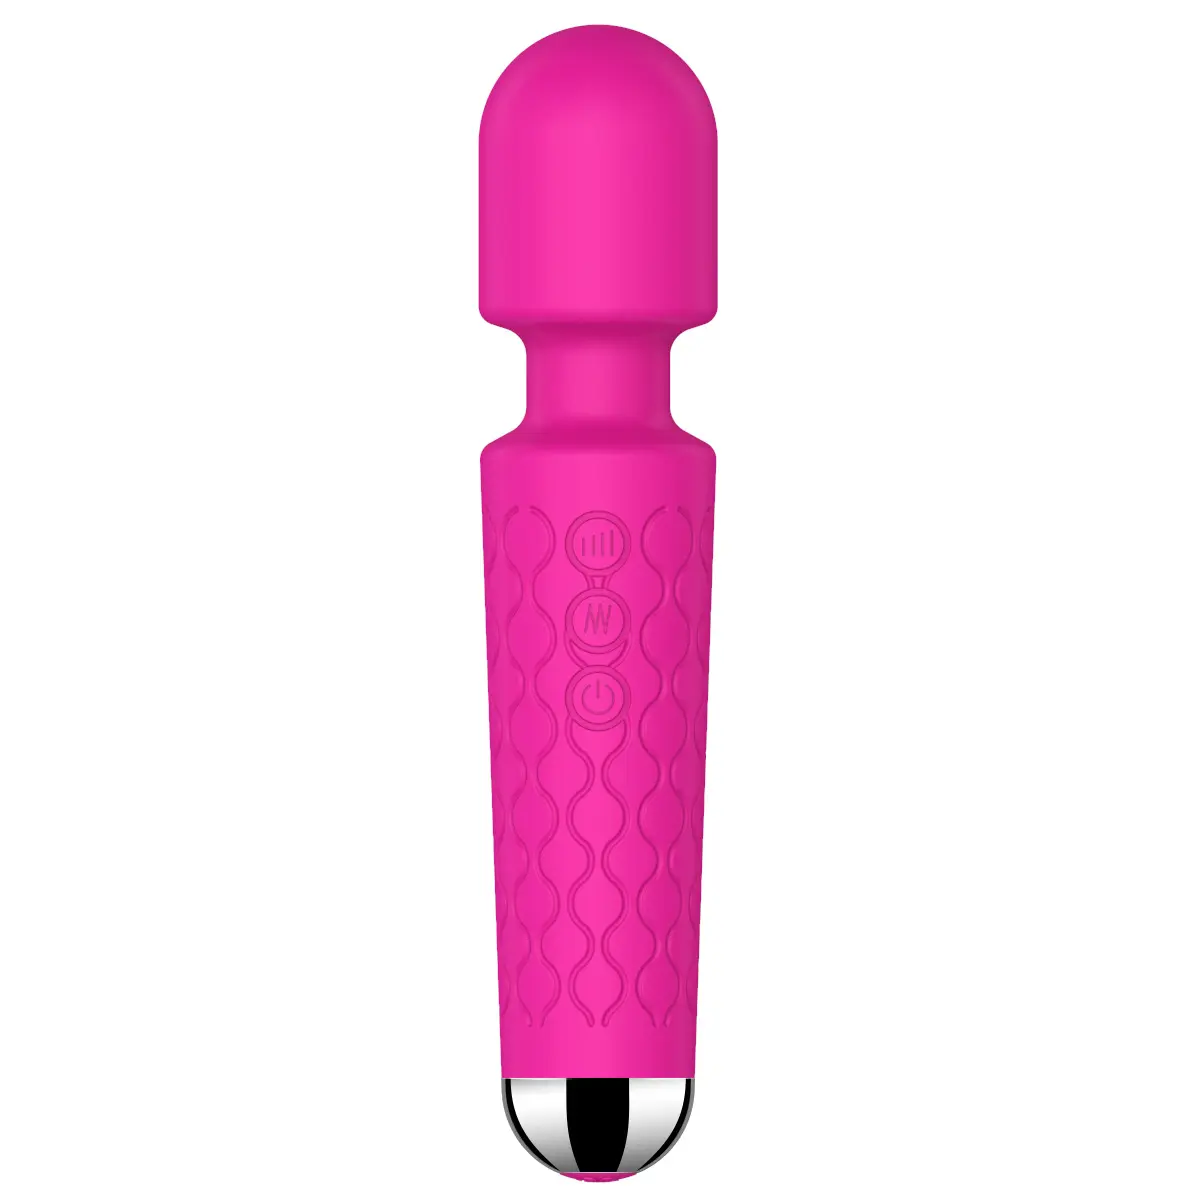 20 Patterns Mini Wand Massager USB Rechargeable Silicone Powerful Sex Tools Women G Spot USB Dildo AV Vibrator Girls Sex Toys